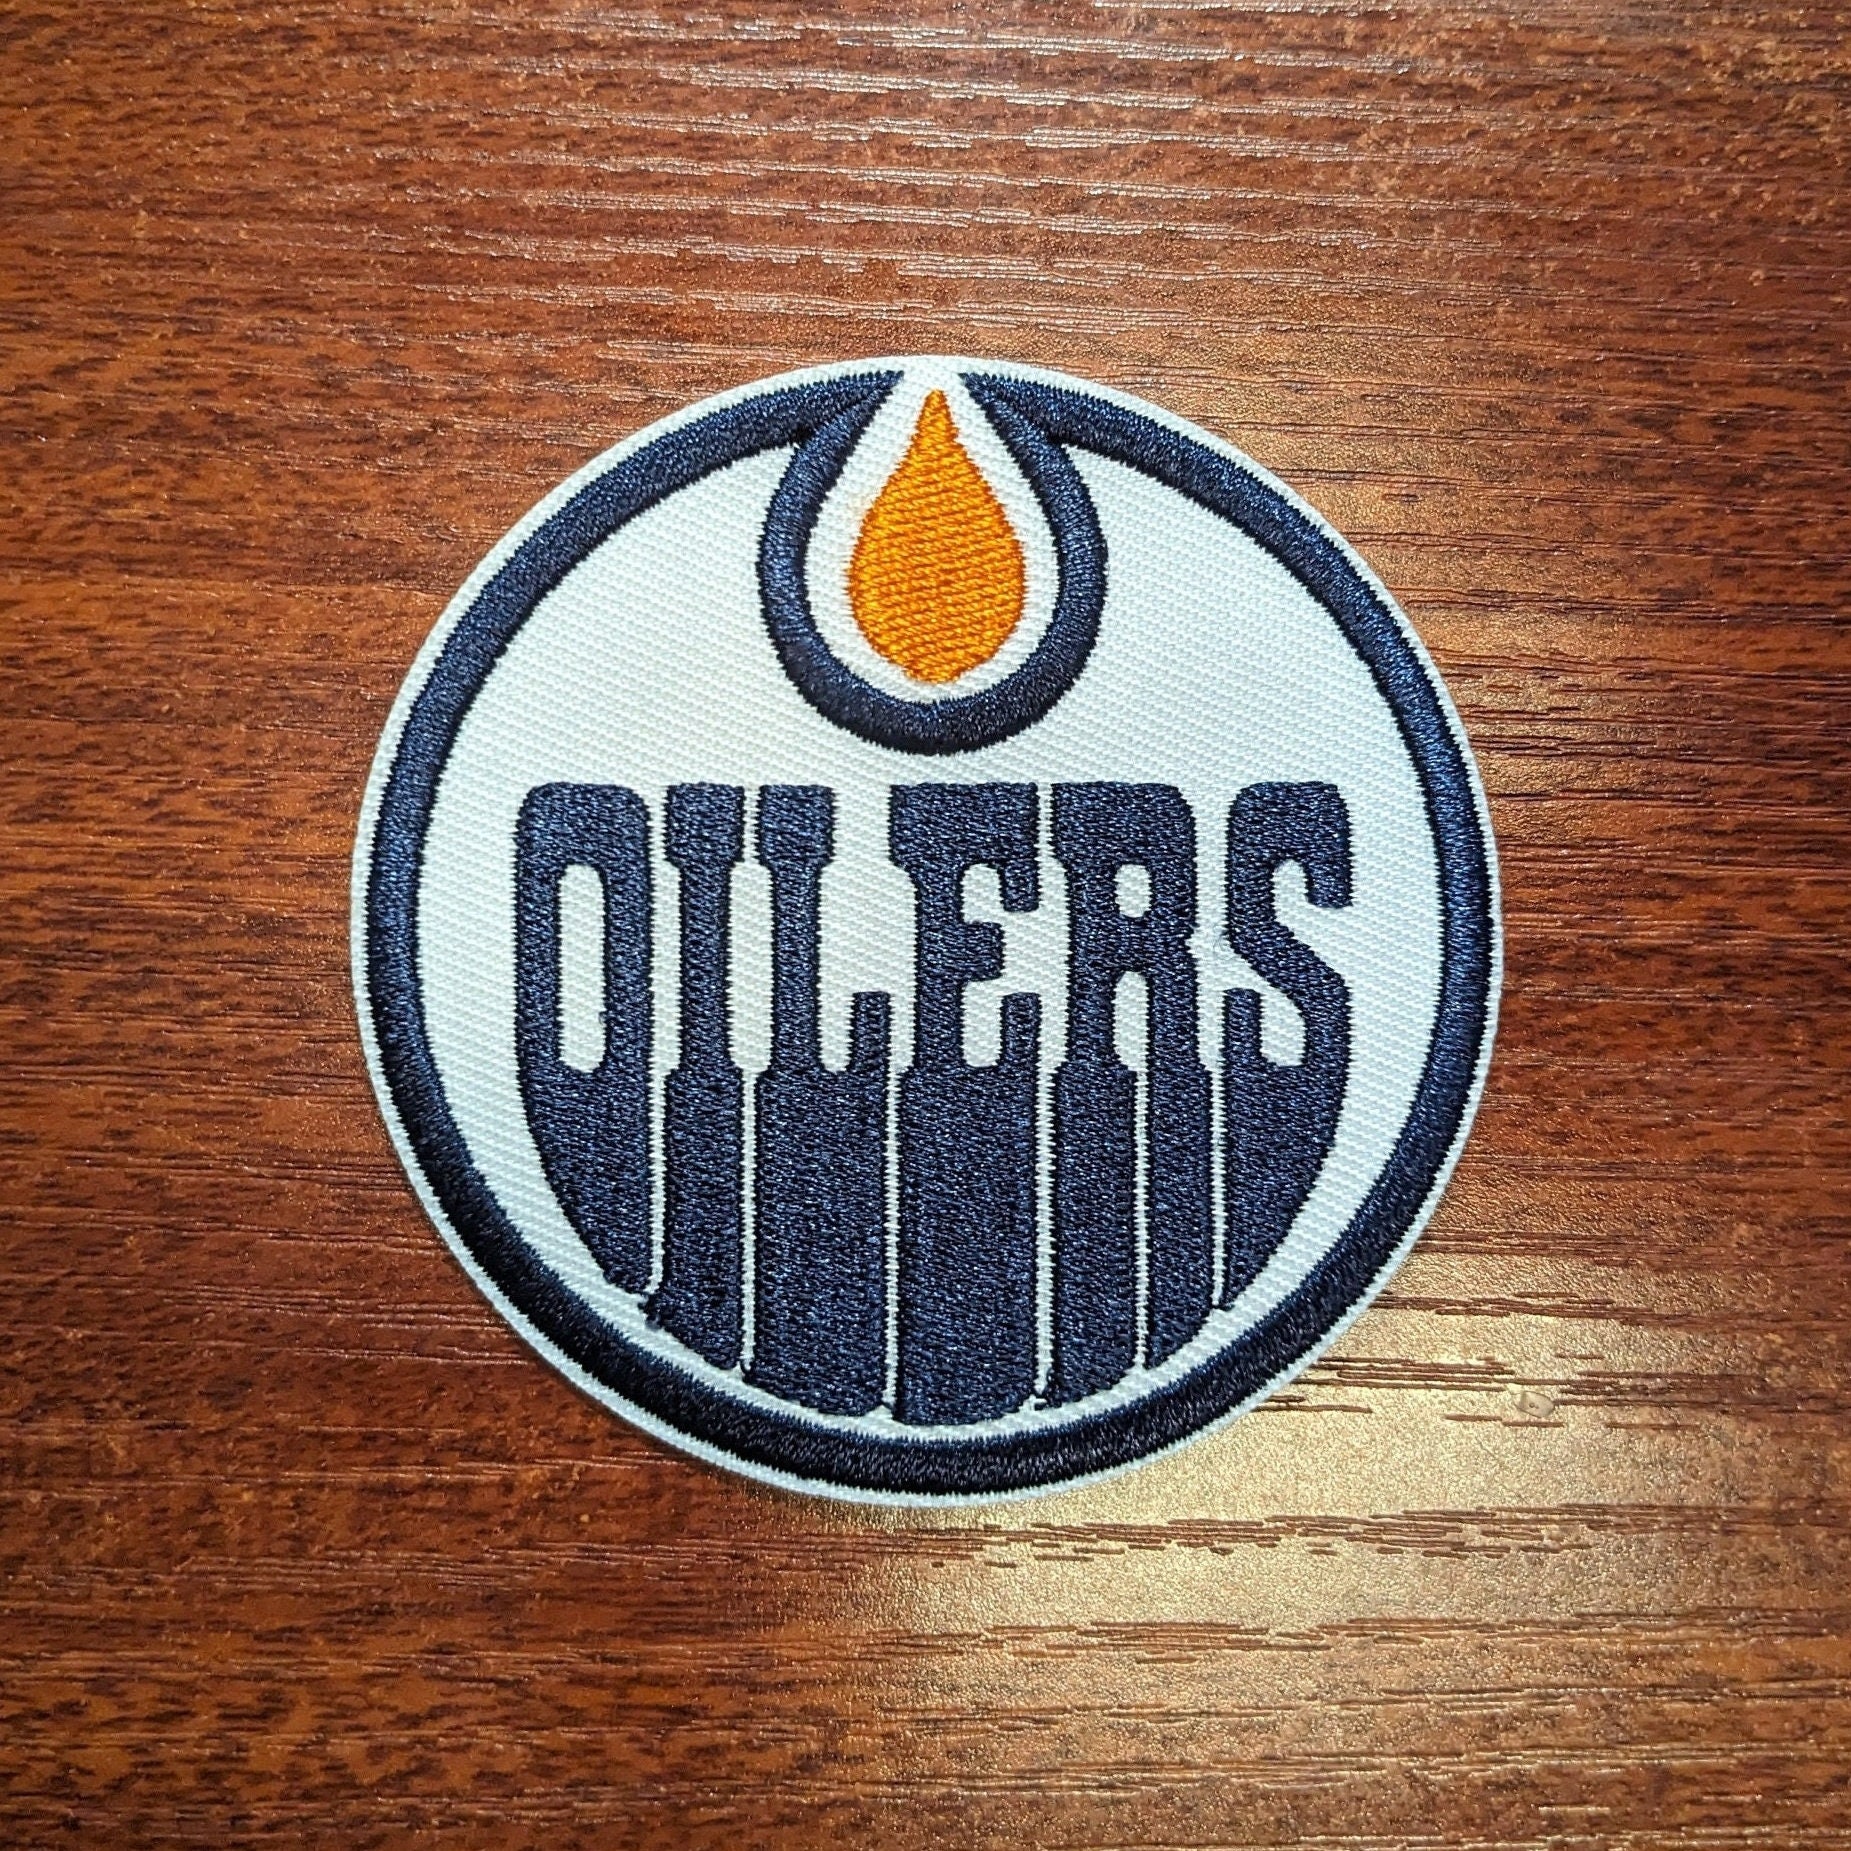 Edmonton Oilers Round Retro Team Logo Embroidered Patch